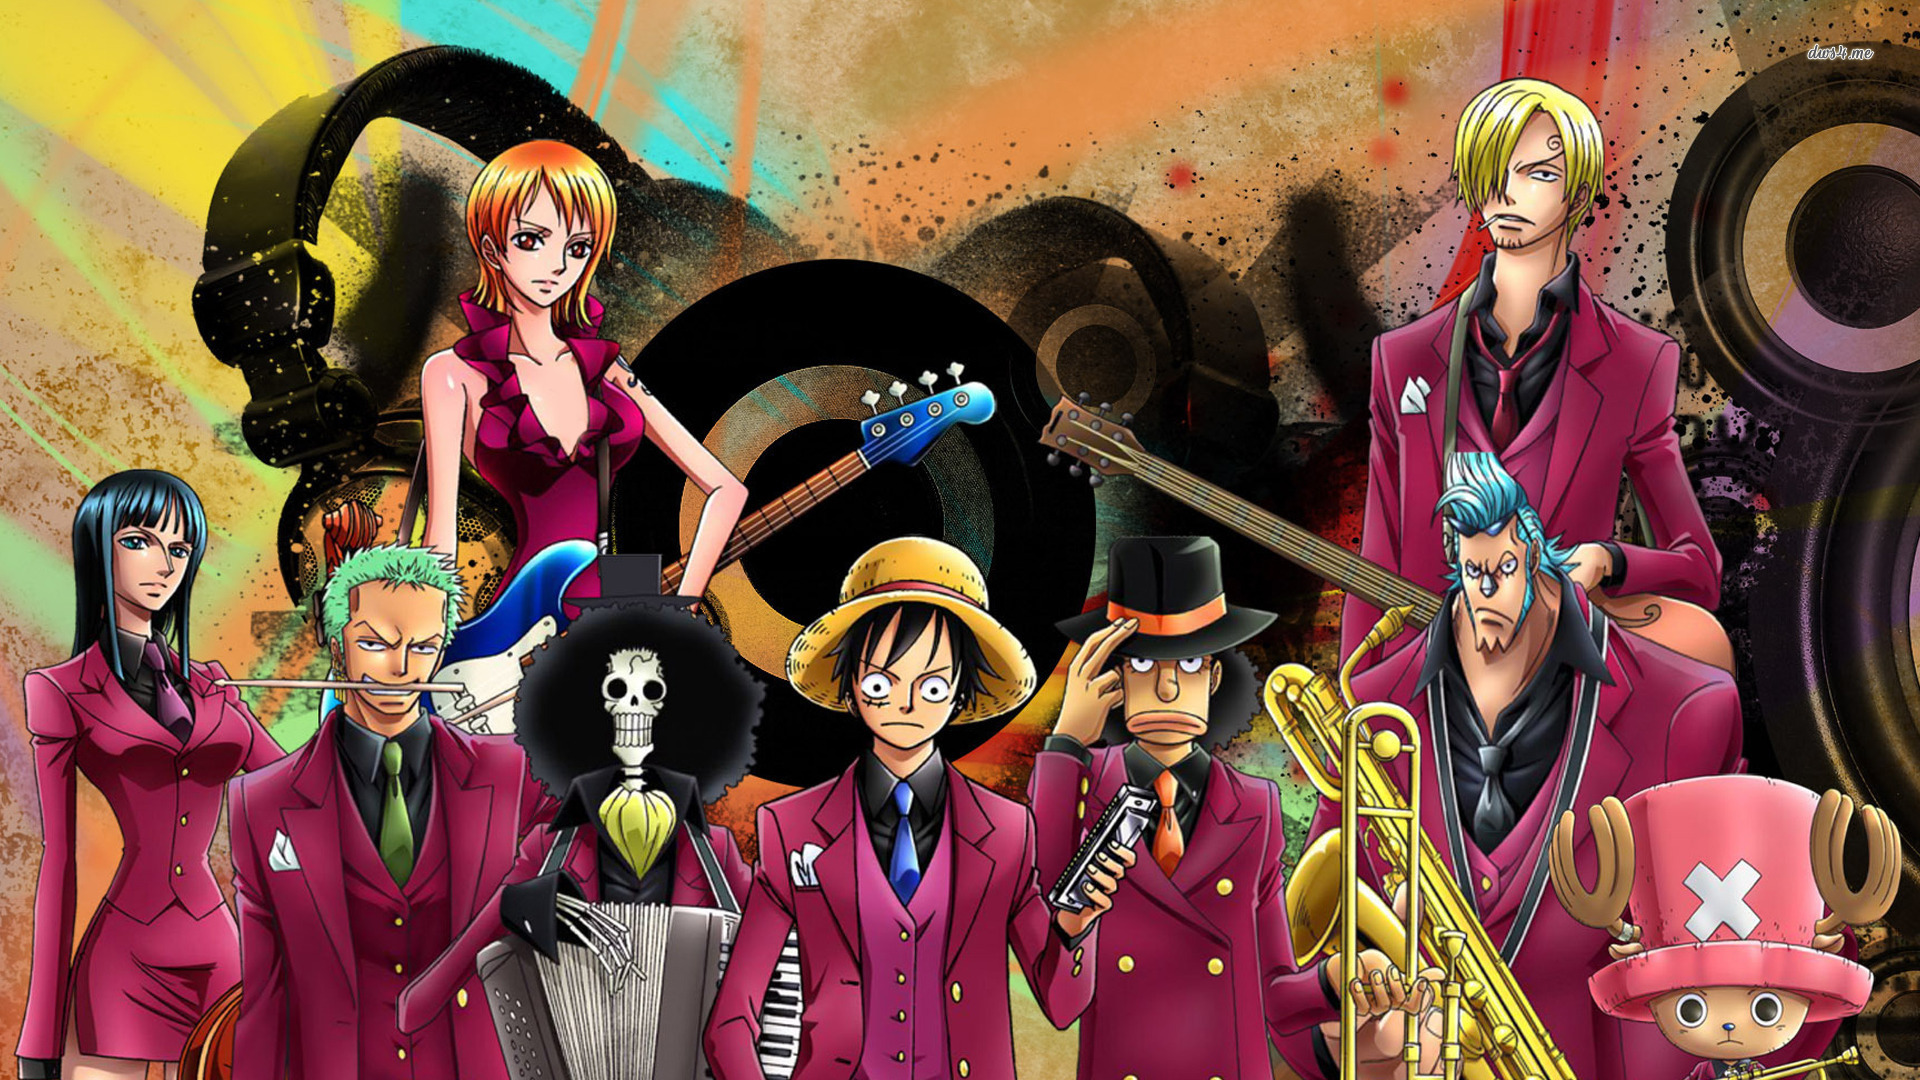 Cool One Piece Wallpapers - WallpaperSafari